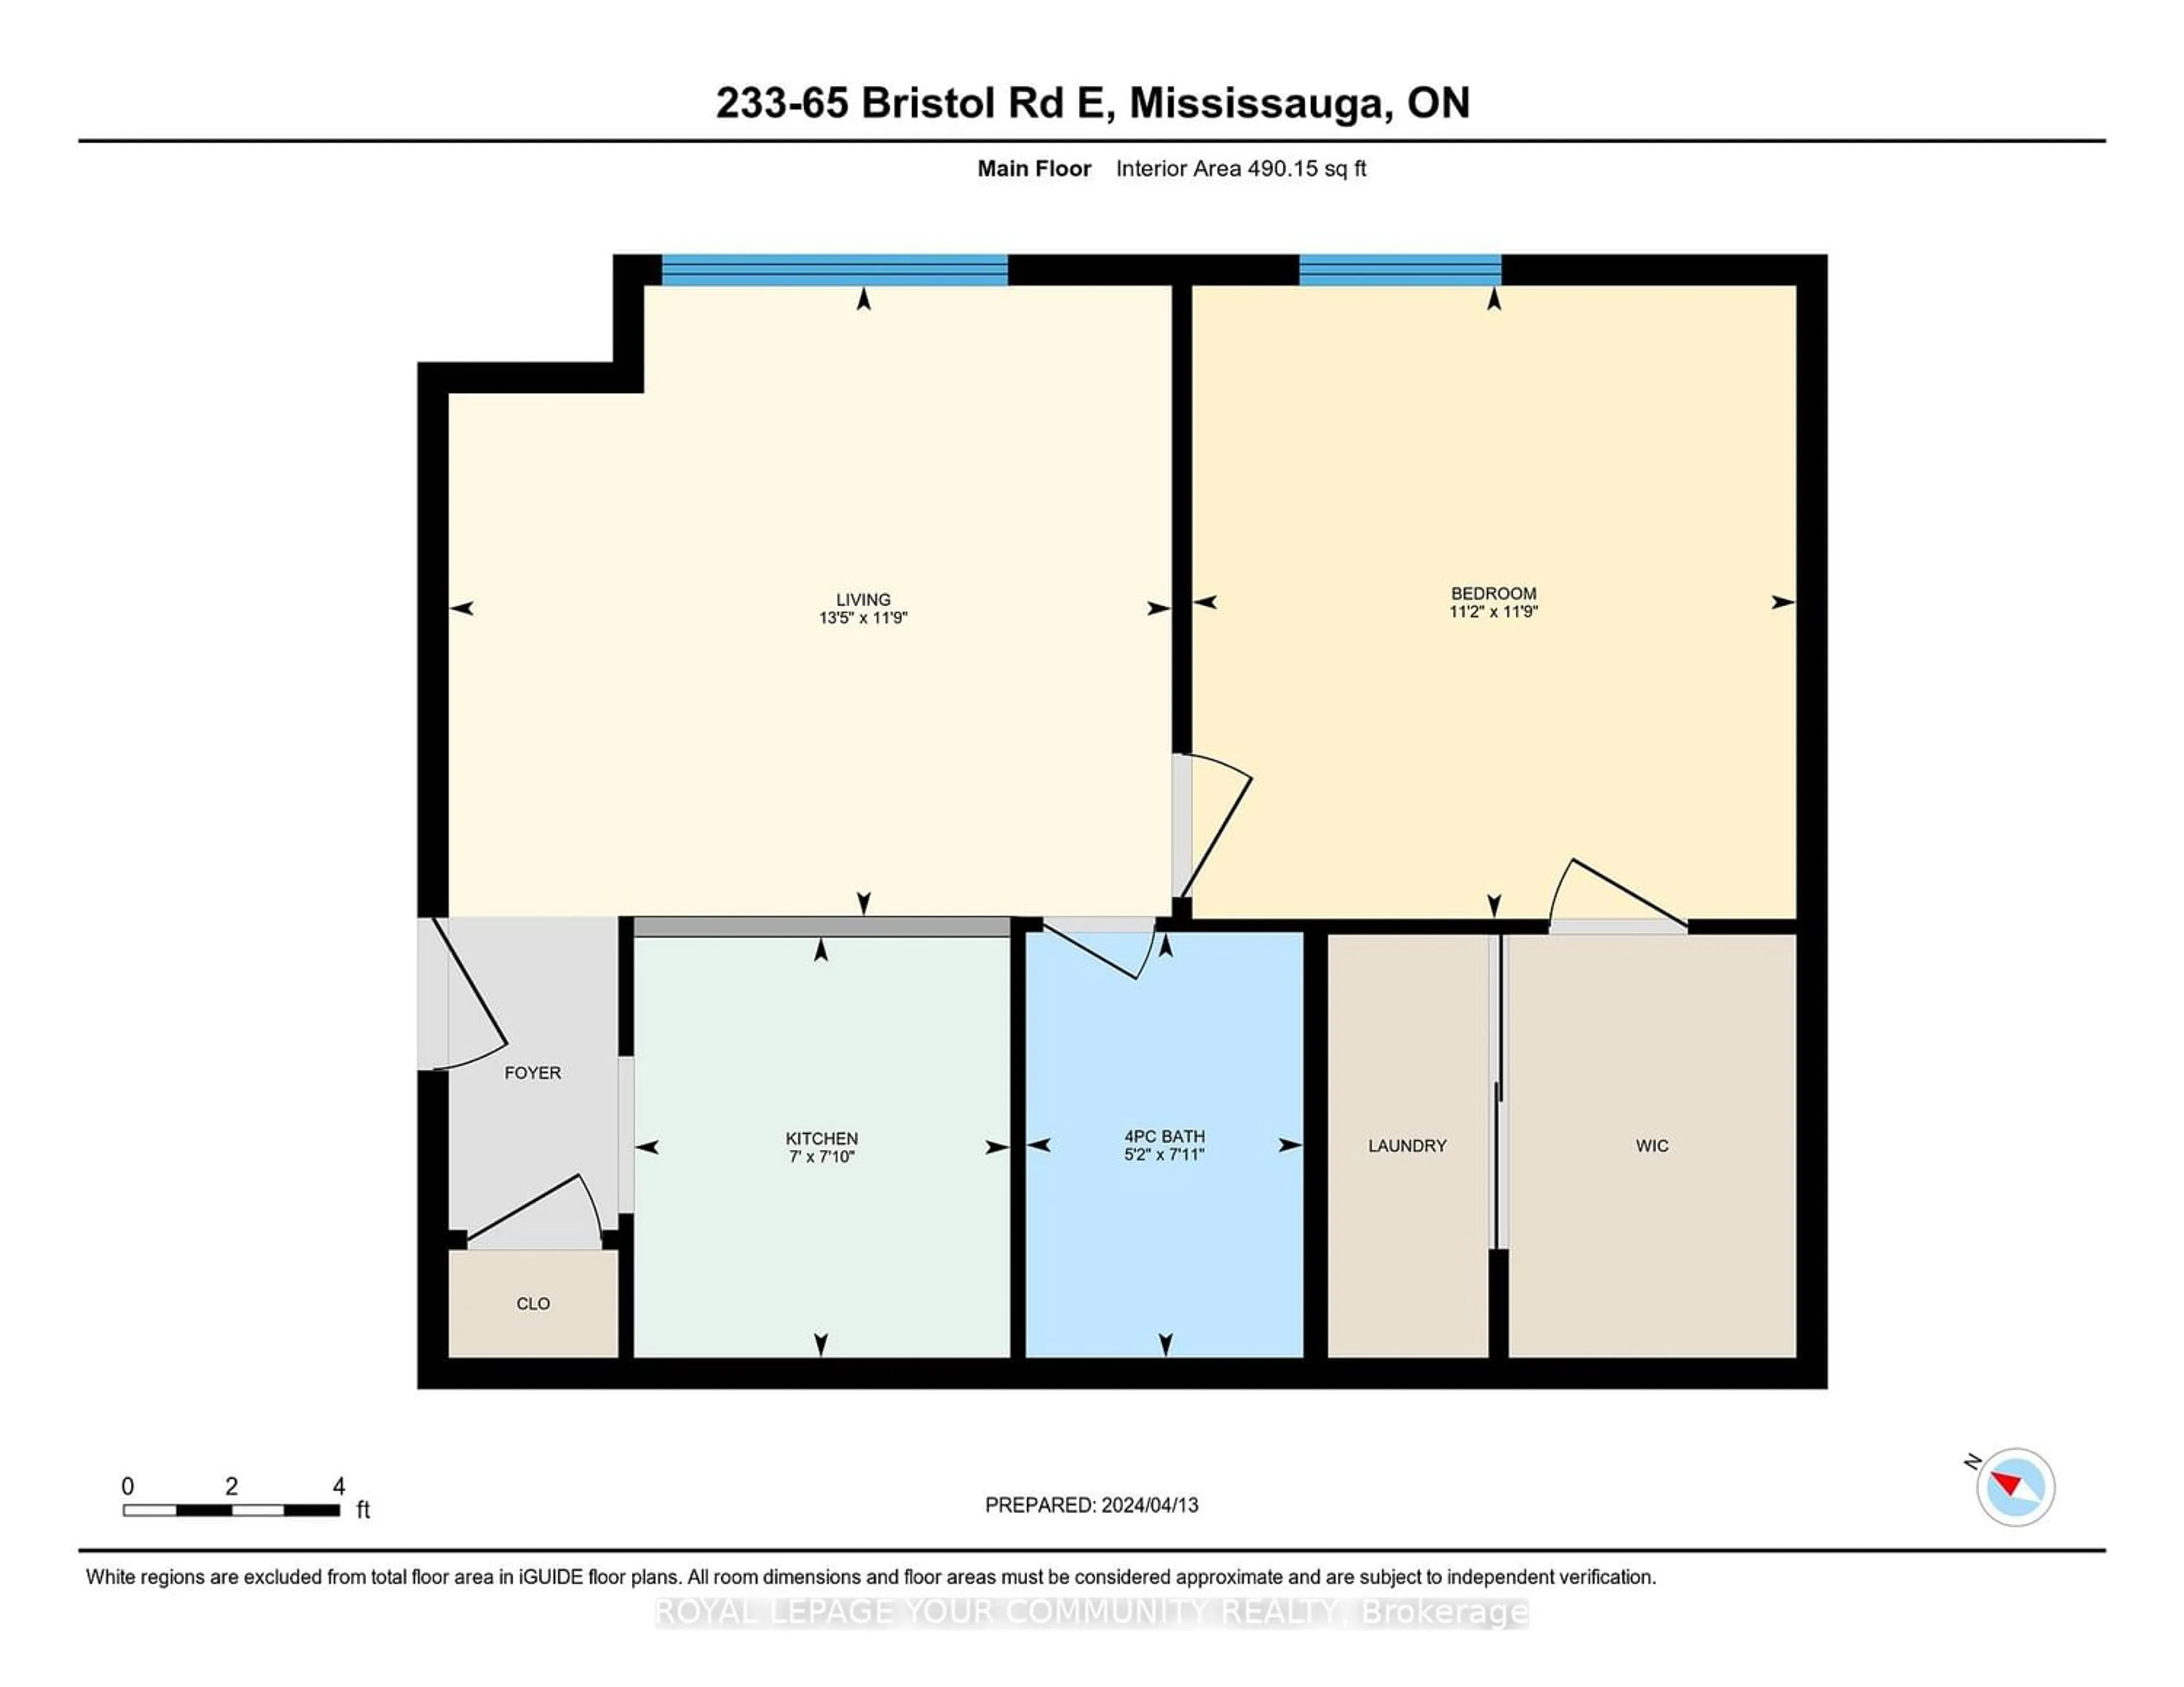 Floor plan for 65 Bristol Rd #233, Mississauga Ontario L4Z 3P1